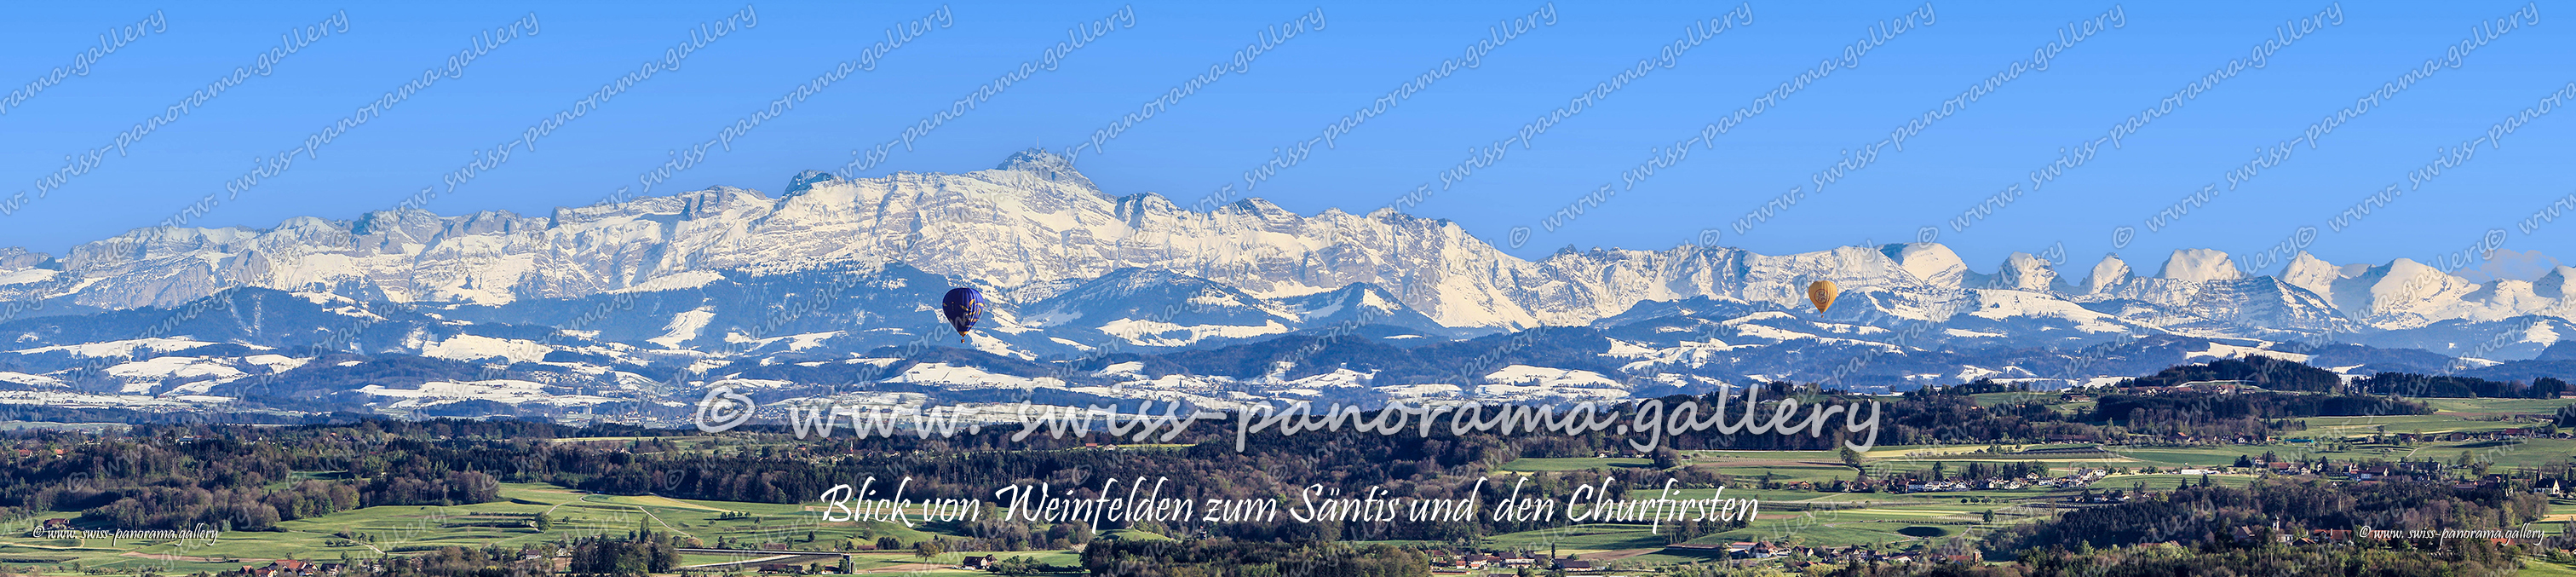 Weinfelden panorama Stelzenhof